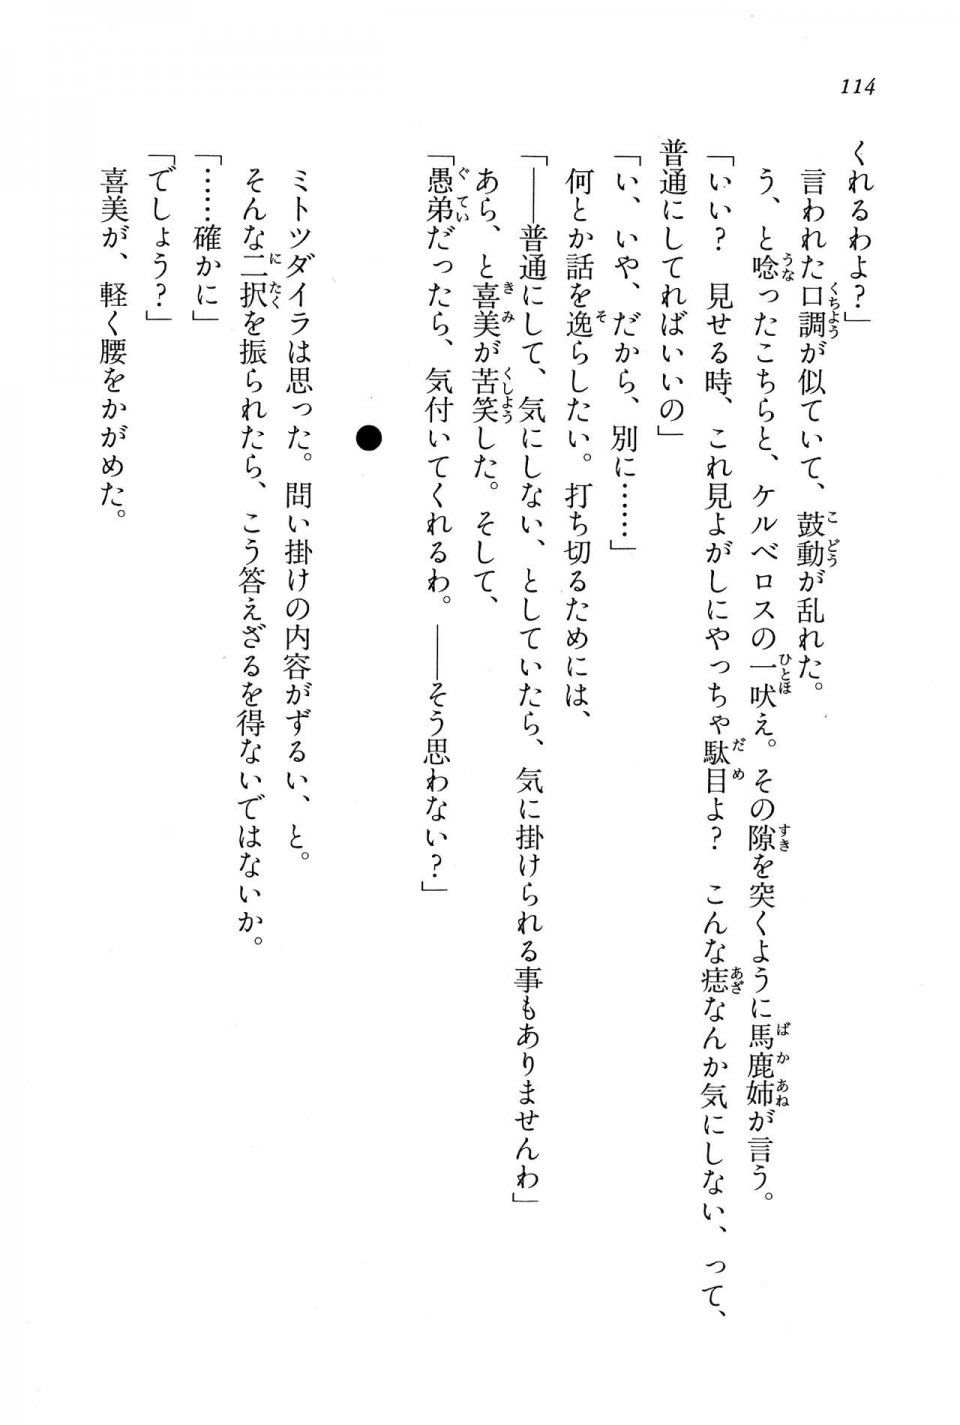 Kyoukai Senjou no Horizon BD Special Mininovel Vol 6(3B) - Photo #118